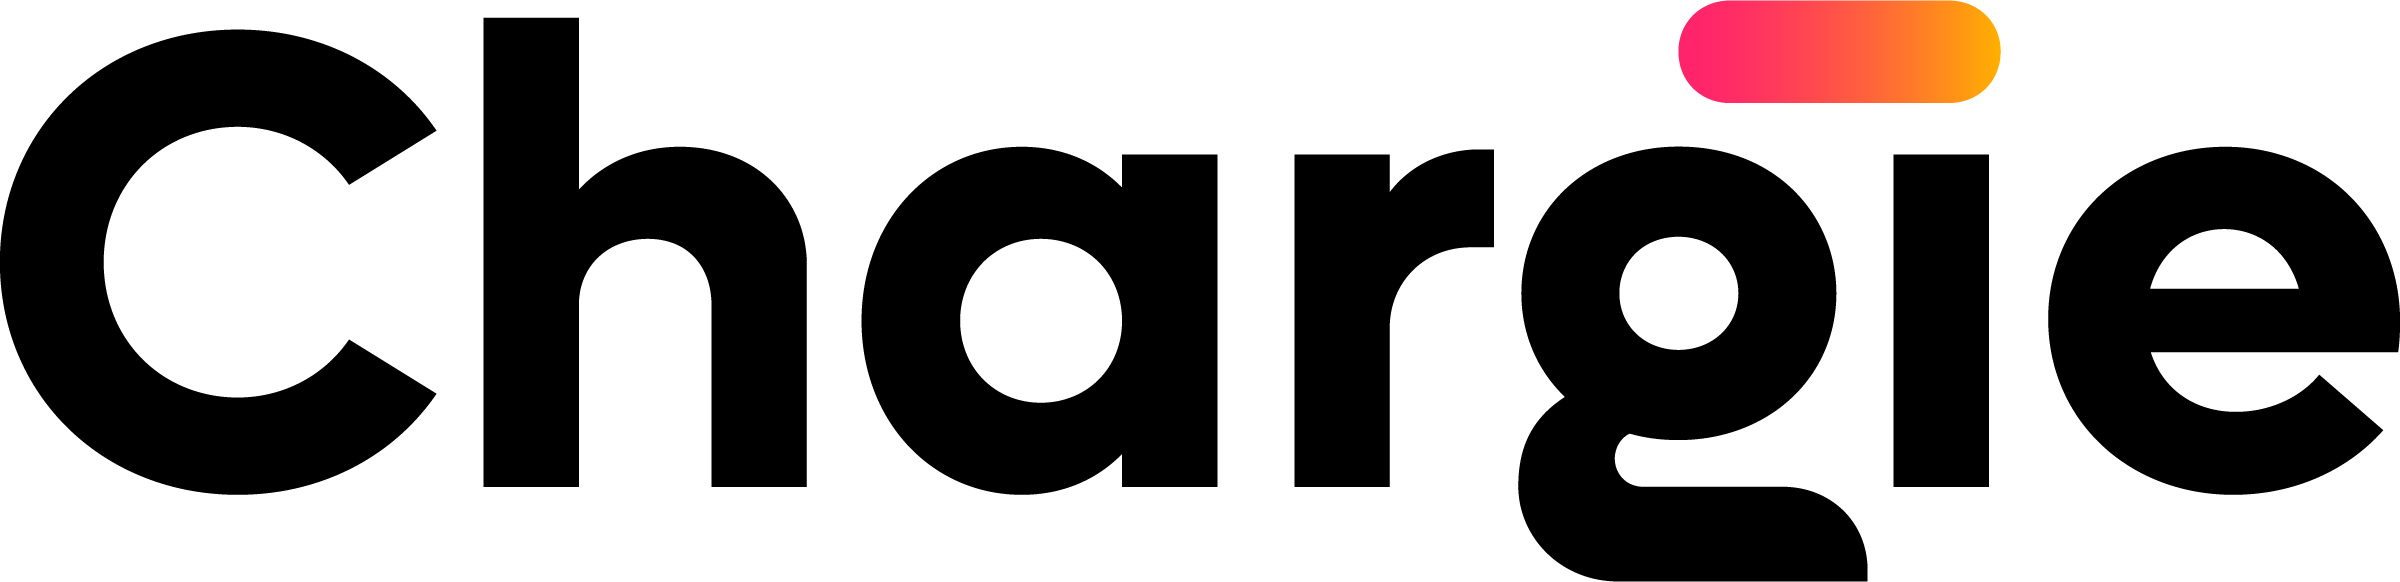 chargie logo